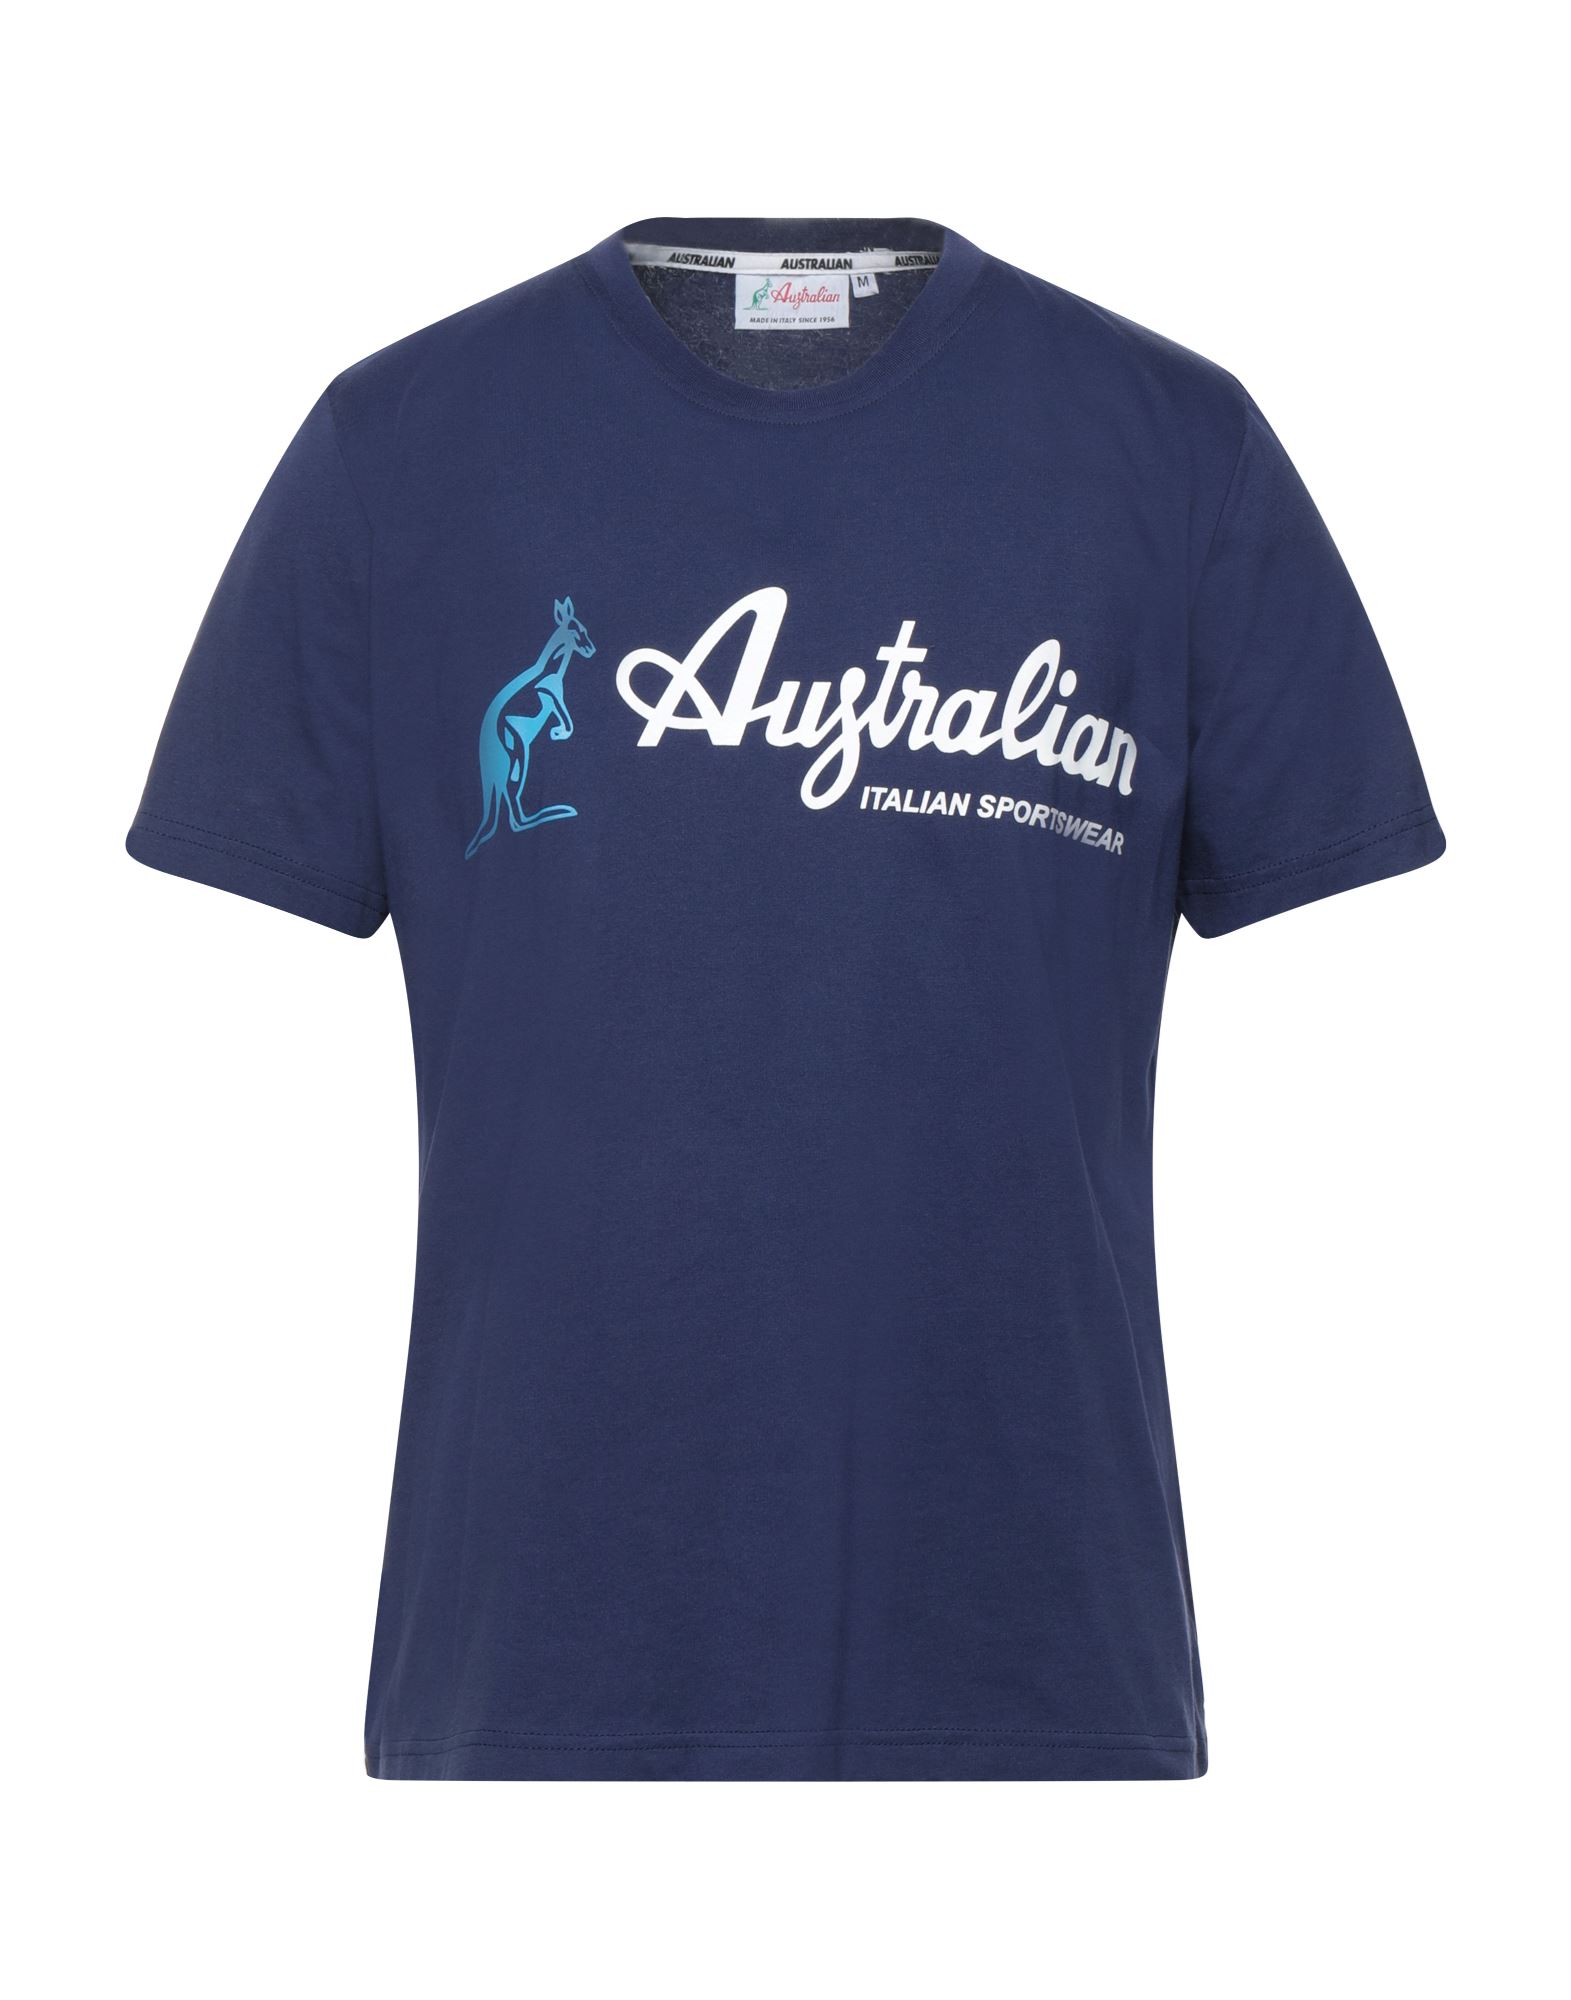 AUSTRALIAN T-shirts